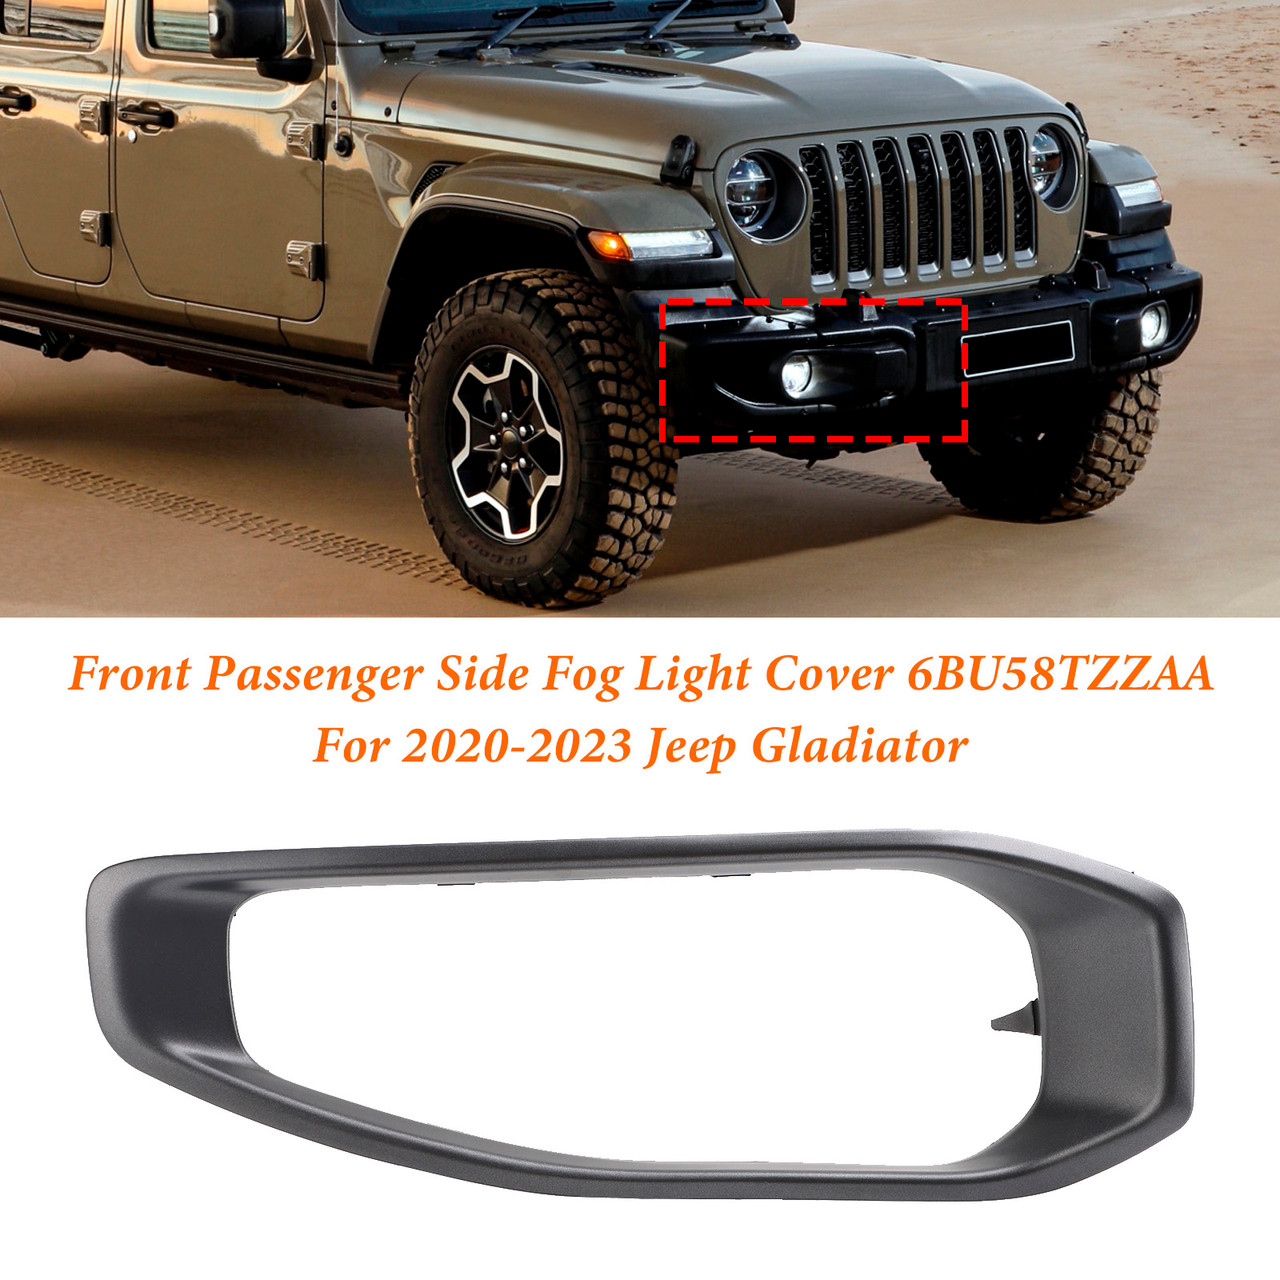 Front Passenger Side Fog Light Trim 6BU58TZZAA For Jeep Gladiator 2020-2023